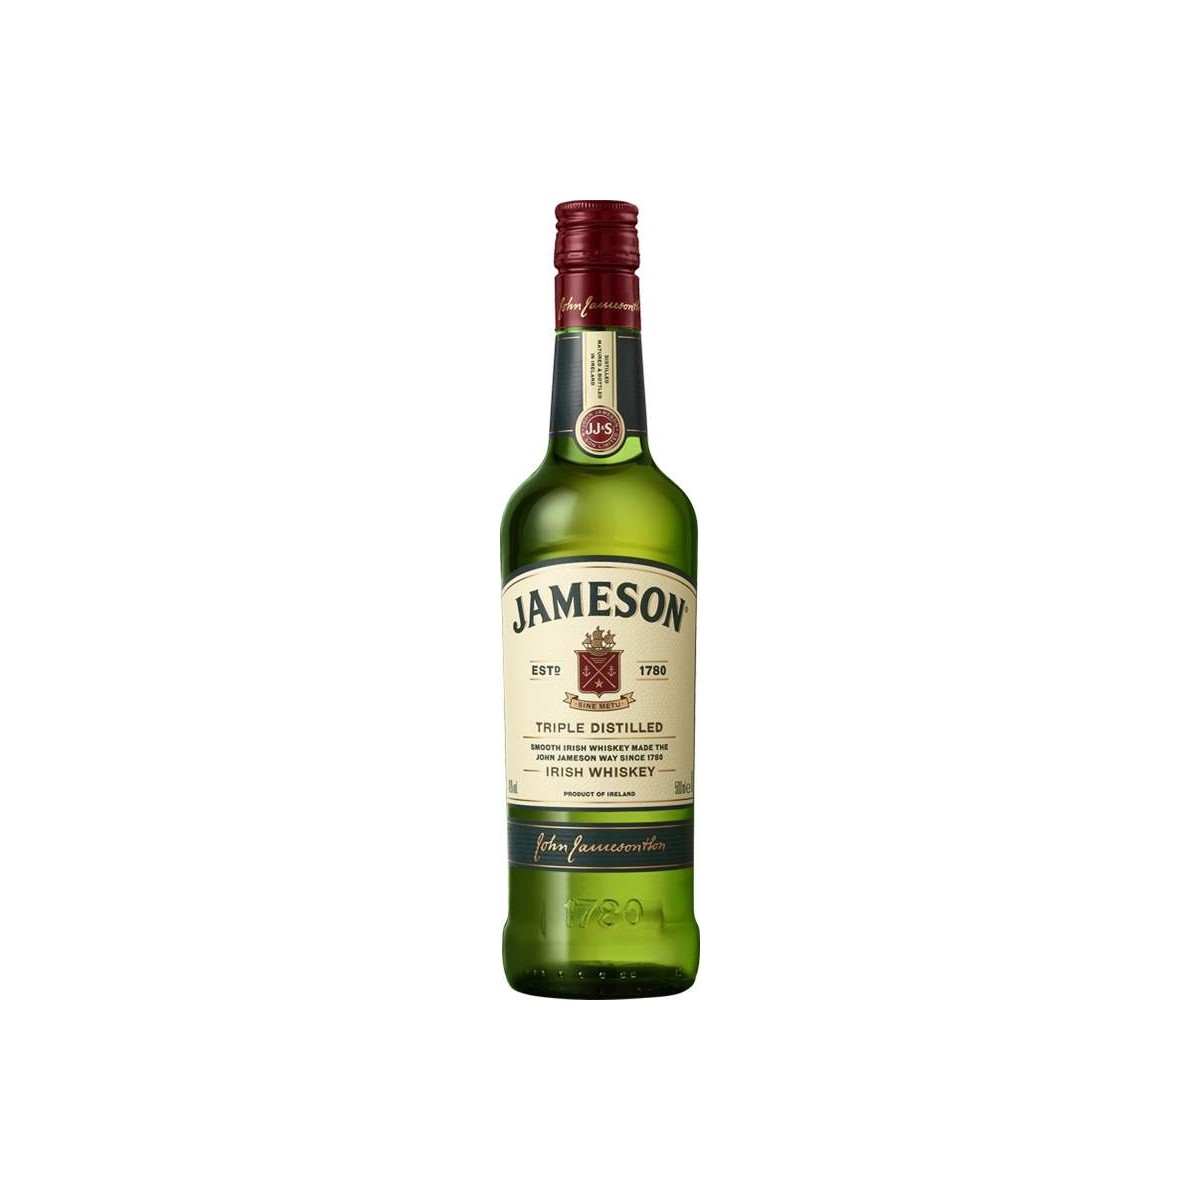 Jameson 0,5l